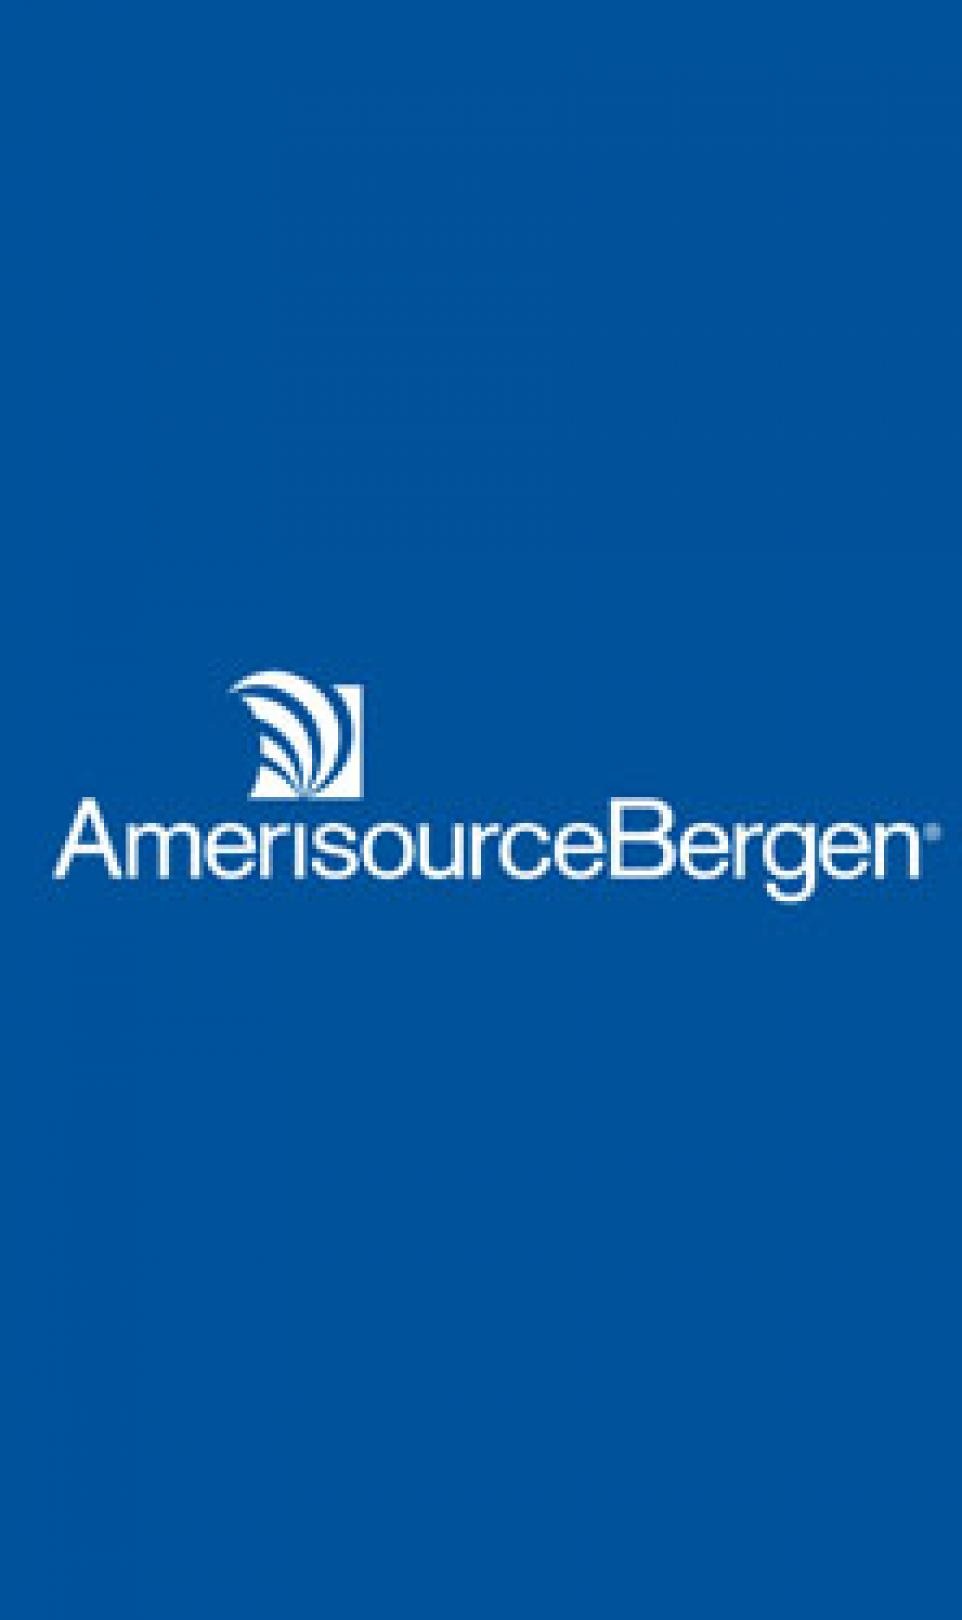 White AmerisourceBergen logo pictured on a blue background